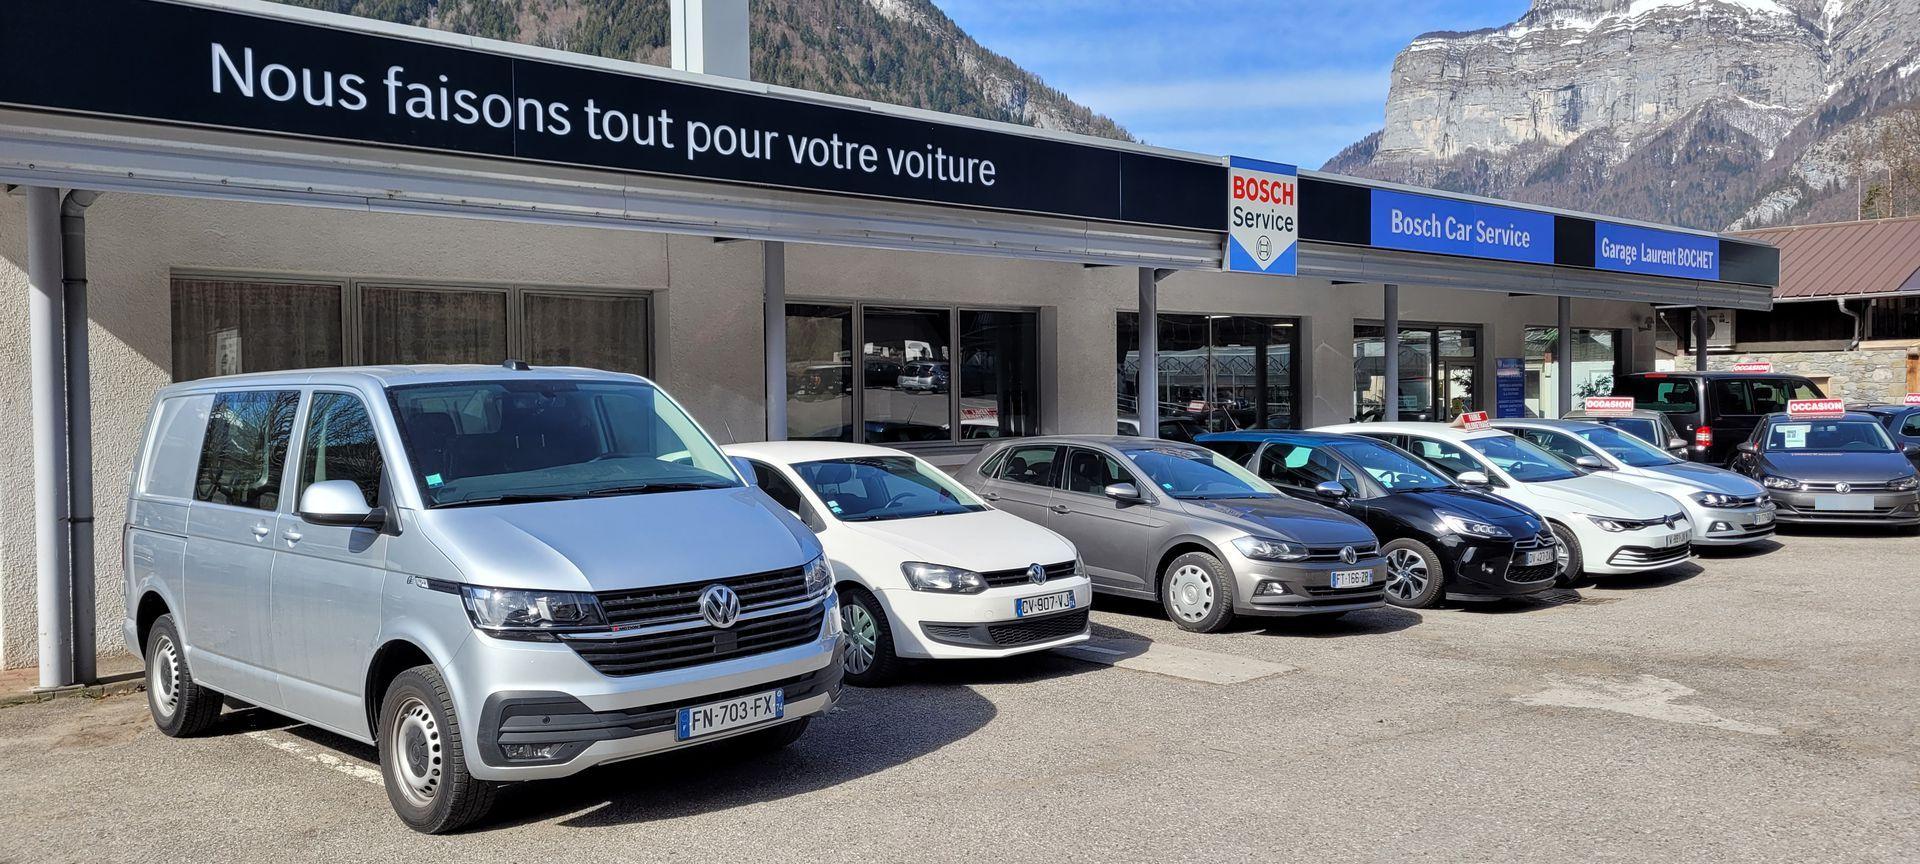 Bosch Car Service Garage Laurent Bochet Thônes